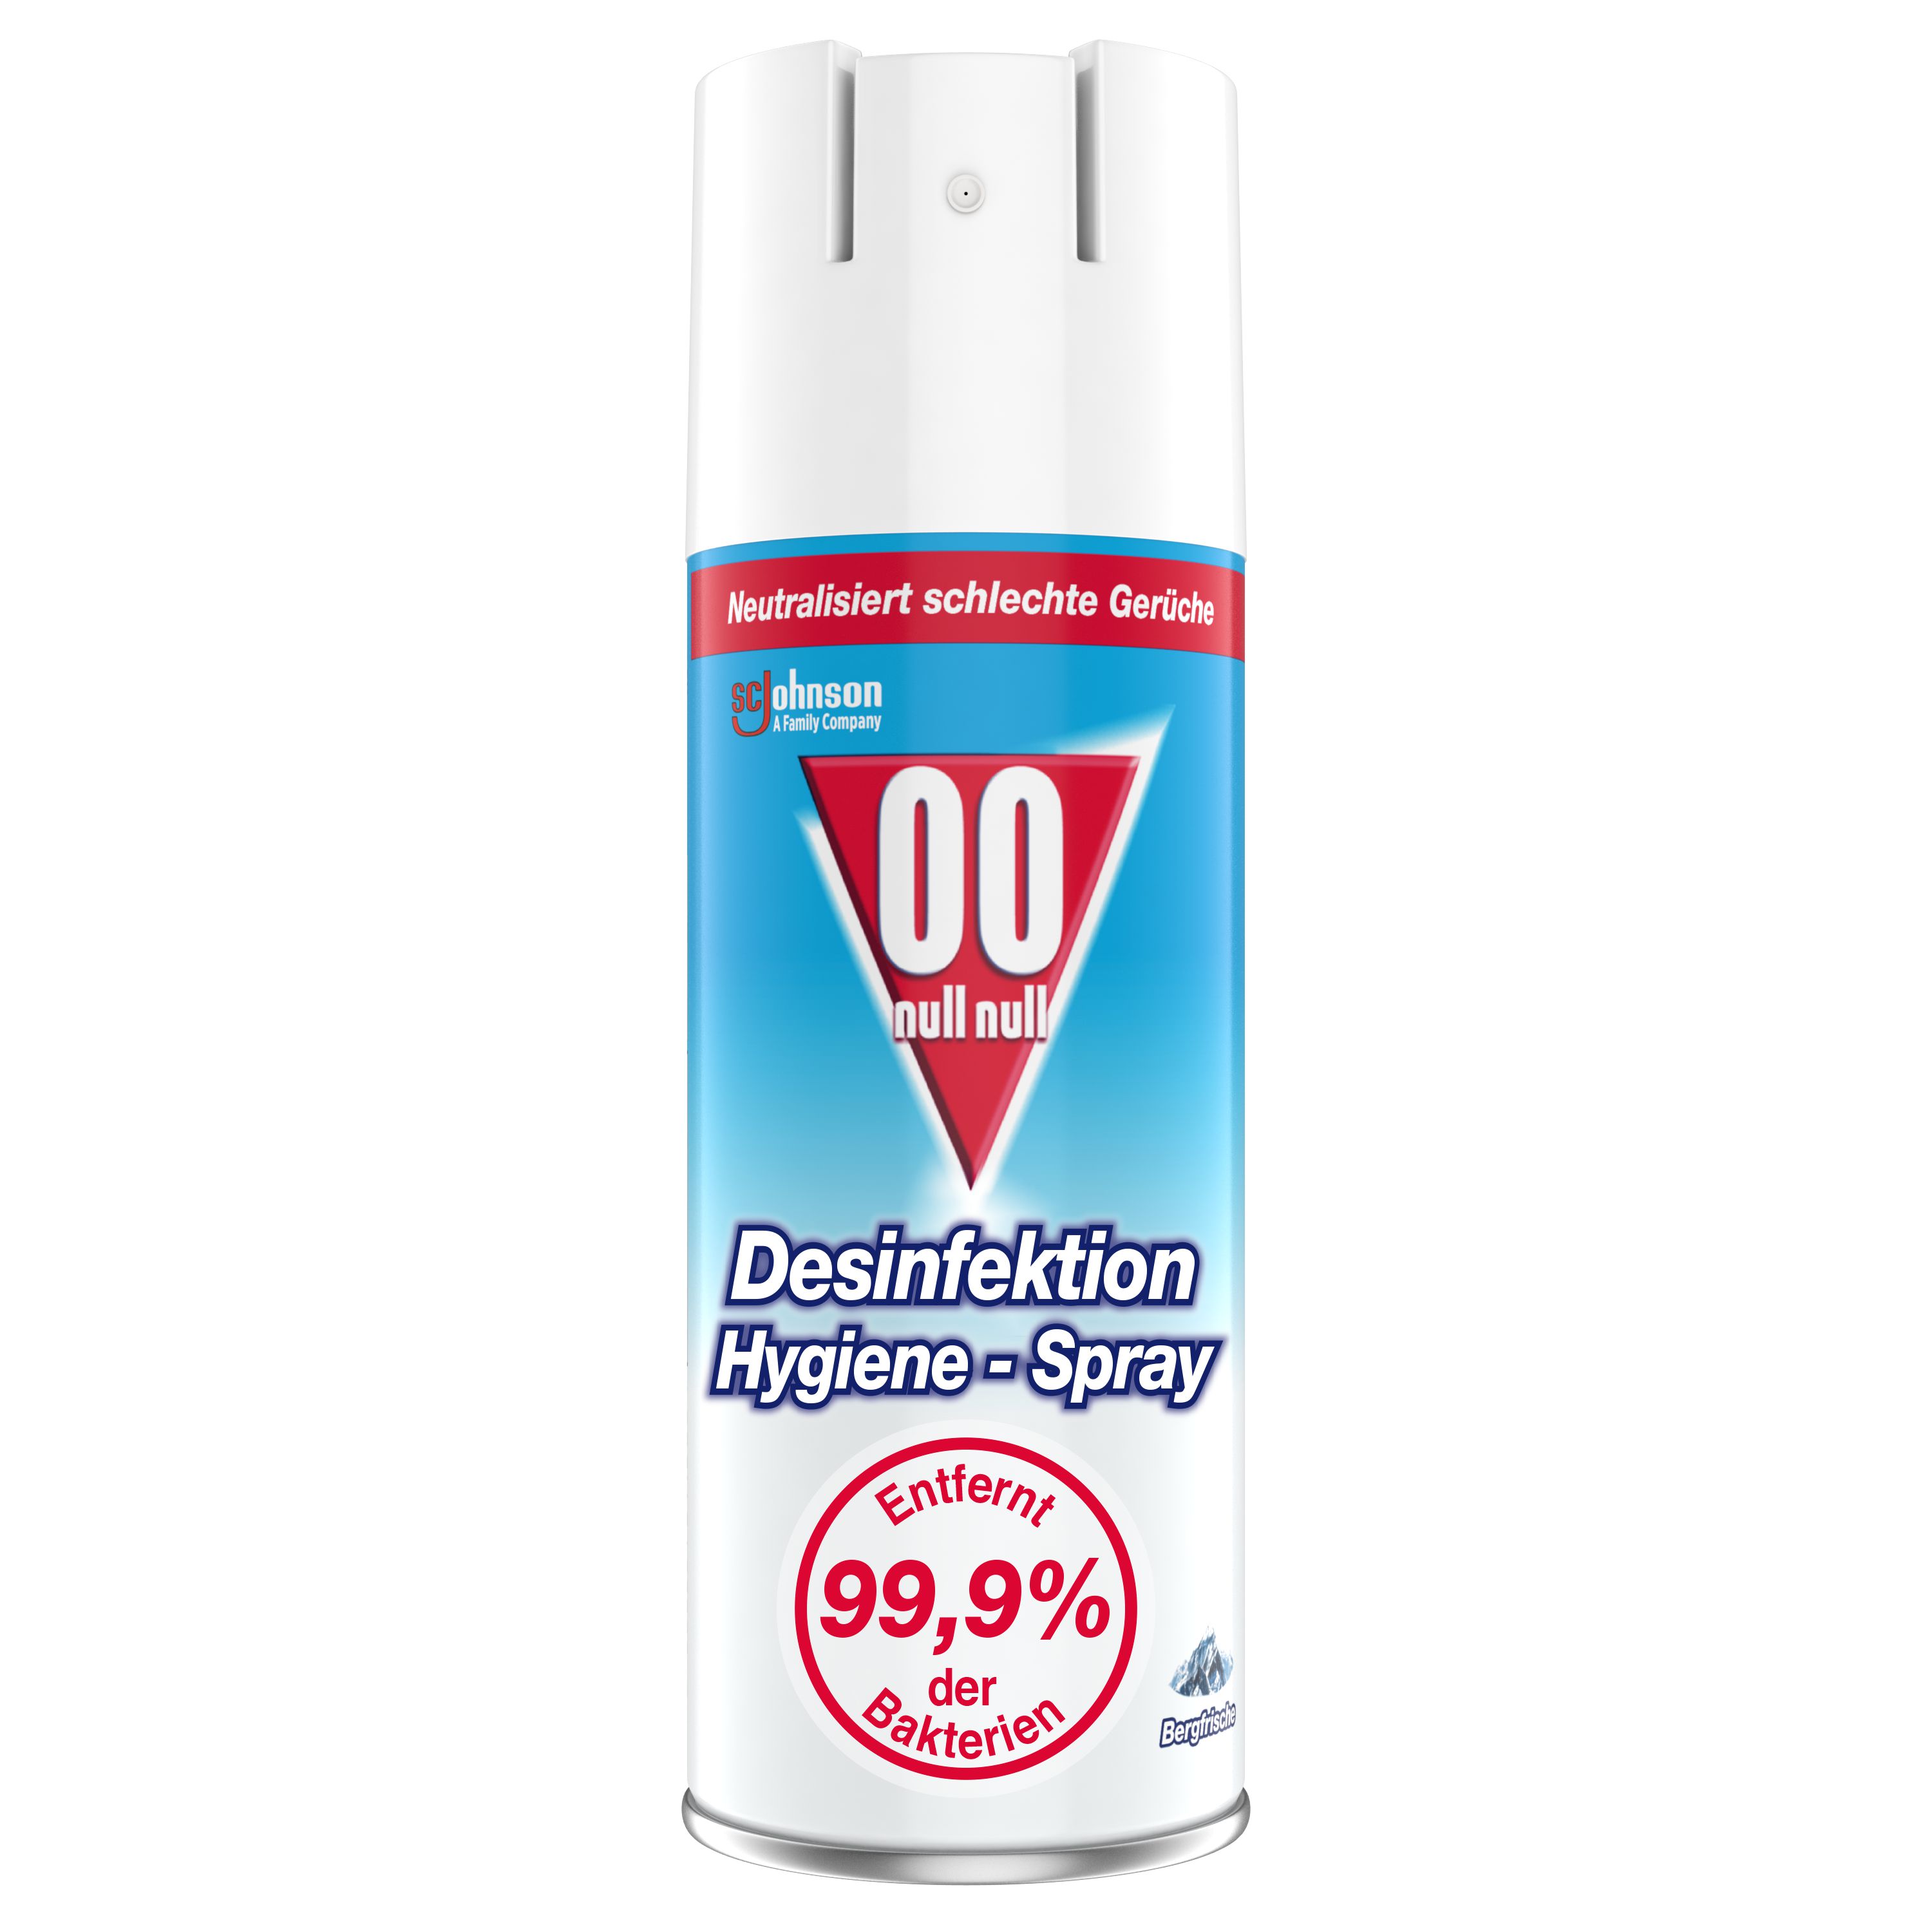 00 Null Null® Desinfektion Hygiene-Spray